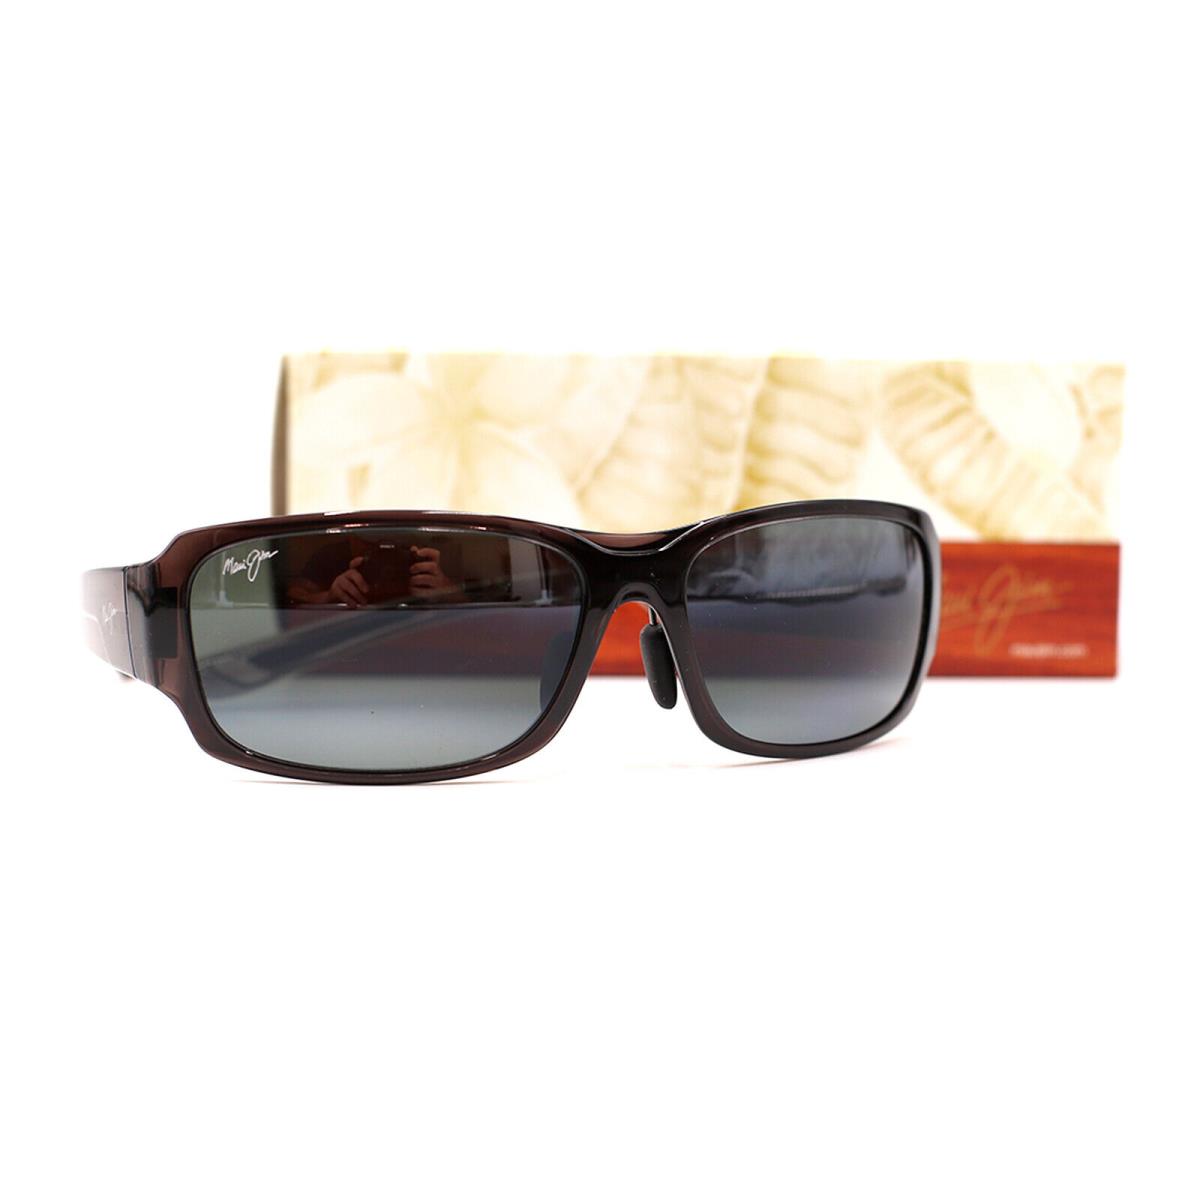 Maui Jim Monkeypod 441-11A Gray Fade Wrapped Sunglasses Polarized Gray Lenses - Gray Frame, Gray Lens